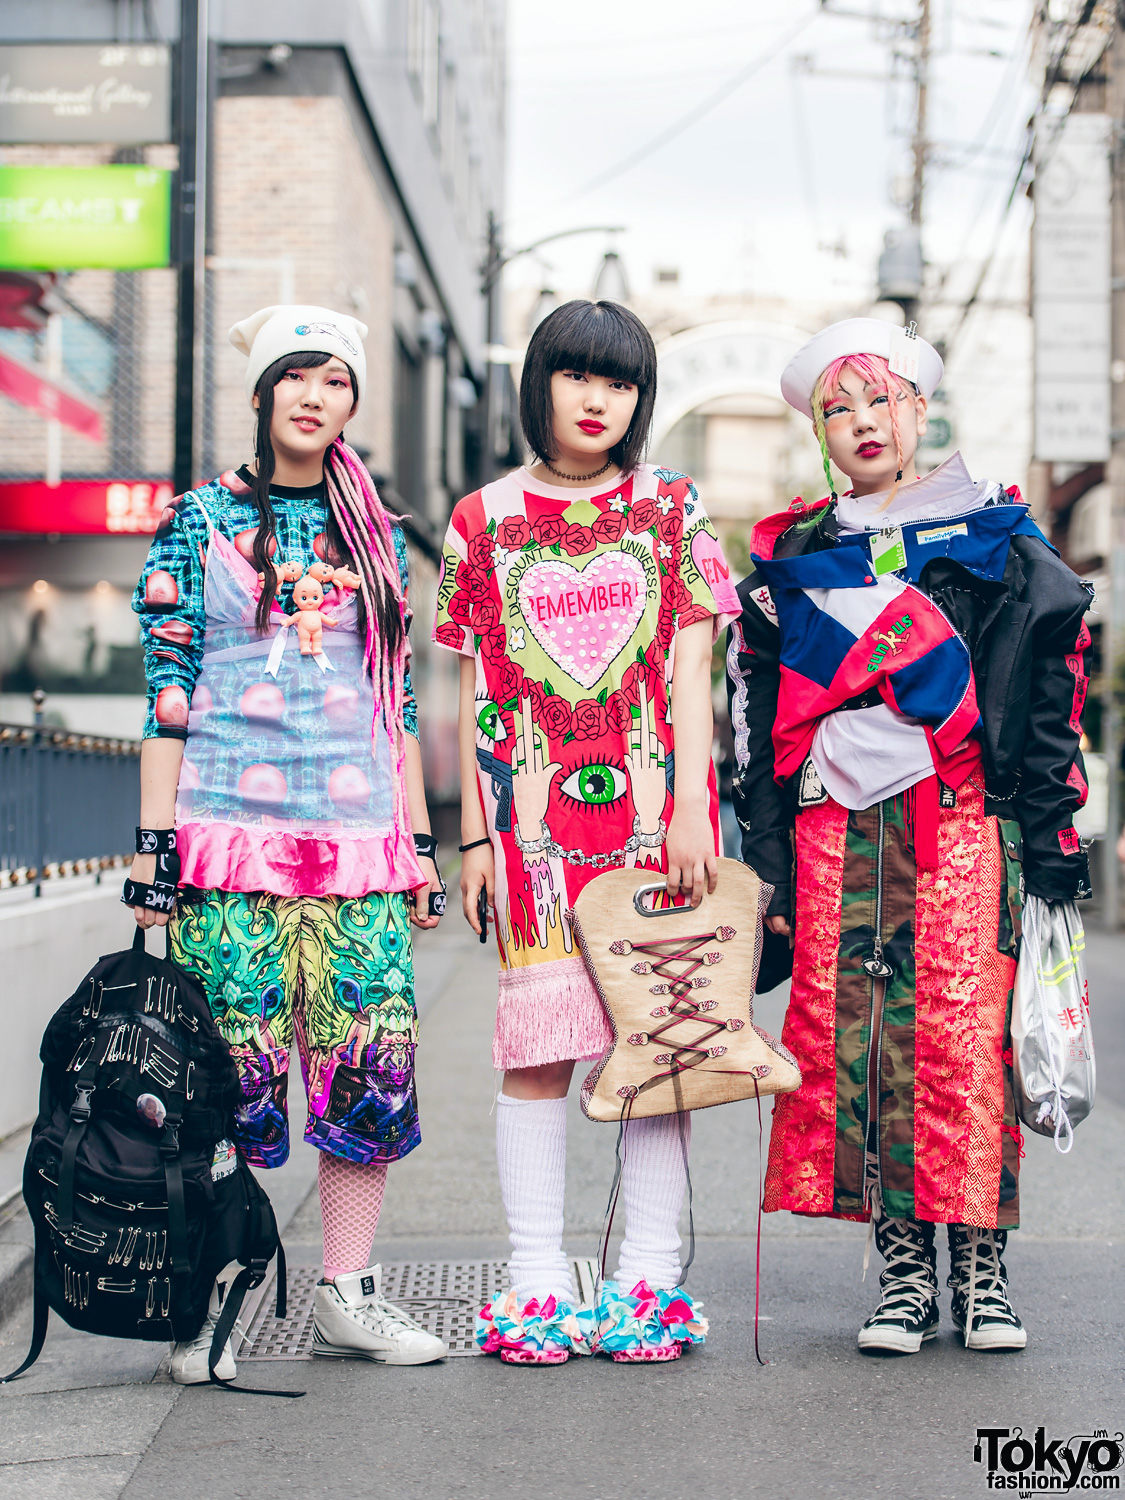 Harajuku Girls in Colorful Eclectic Streetwear w/ FOTUS, Space Tribe, Sabre, Damage, Dog Harajuku, Hoyajuku, Pinnap, Sunkus x Family Mart & Moonzone